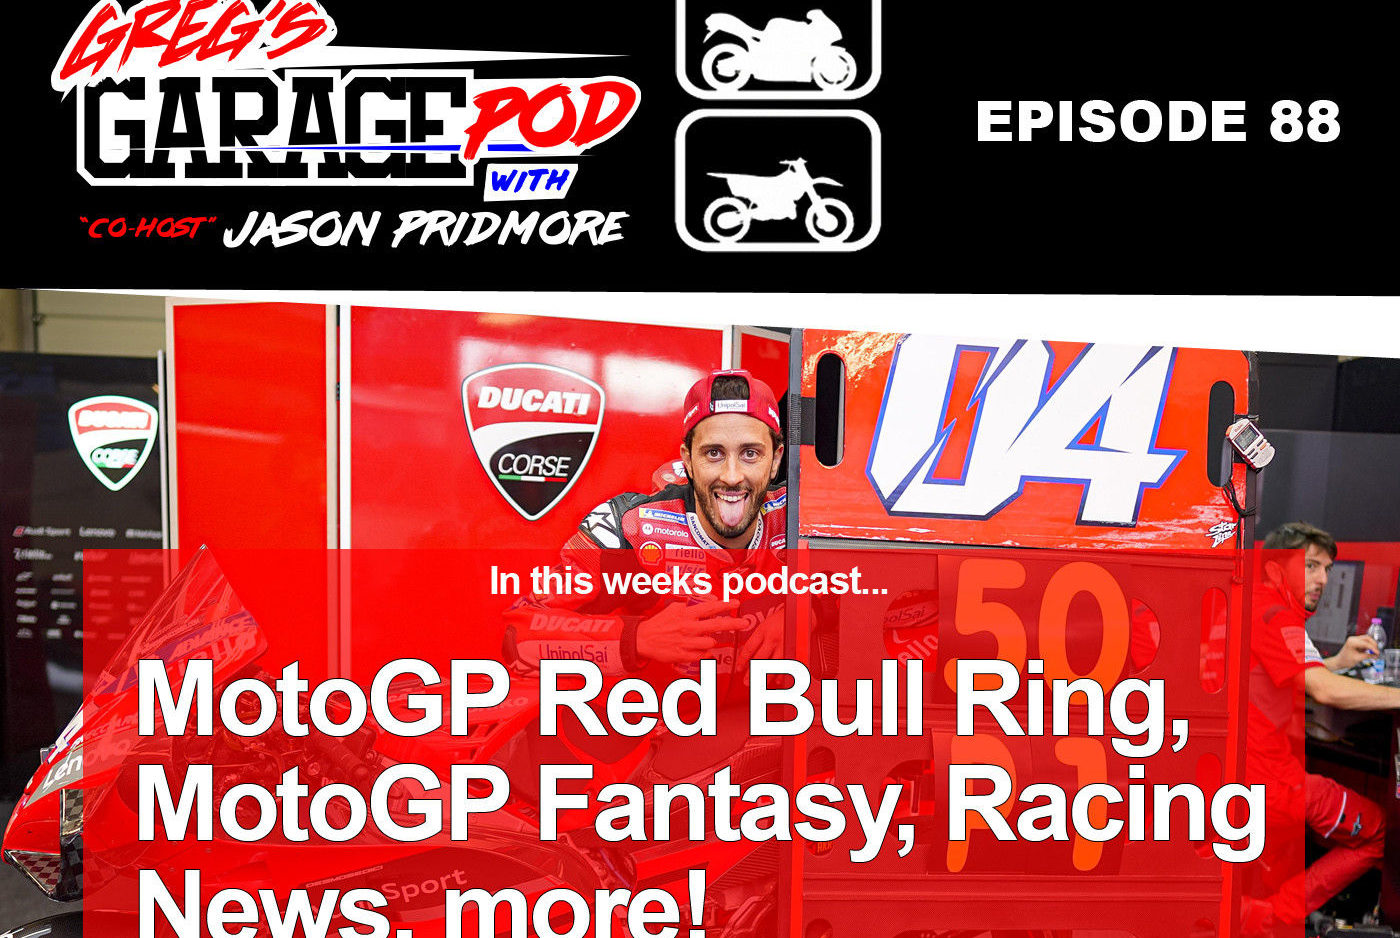 Podcast: Greg’s Garage Pod With Jason Pridmore Episode 88